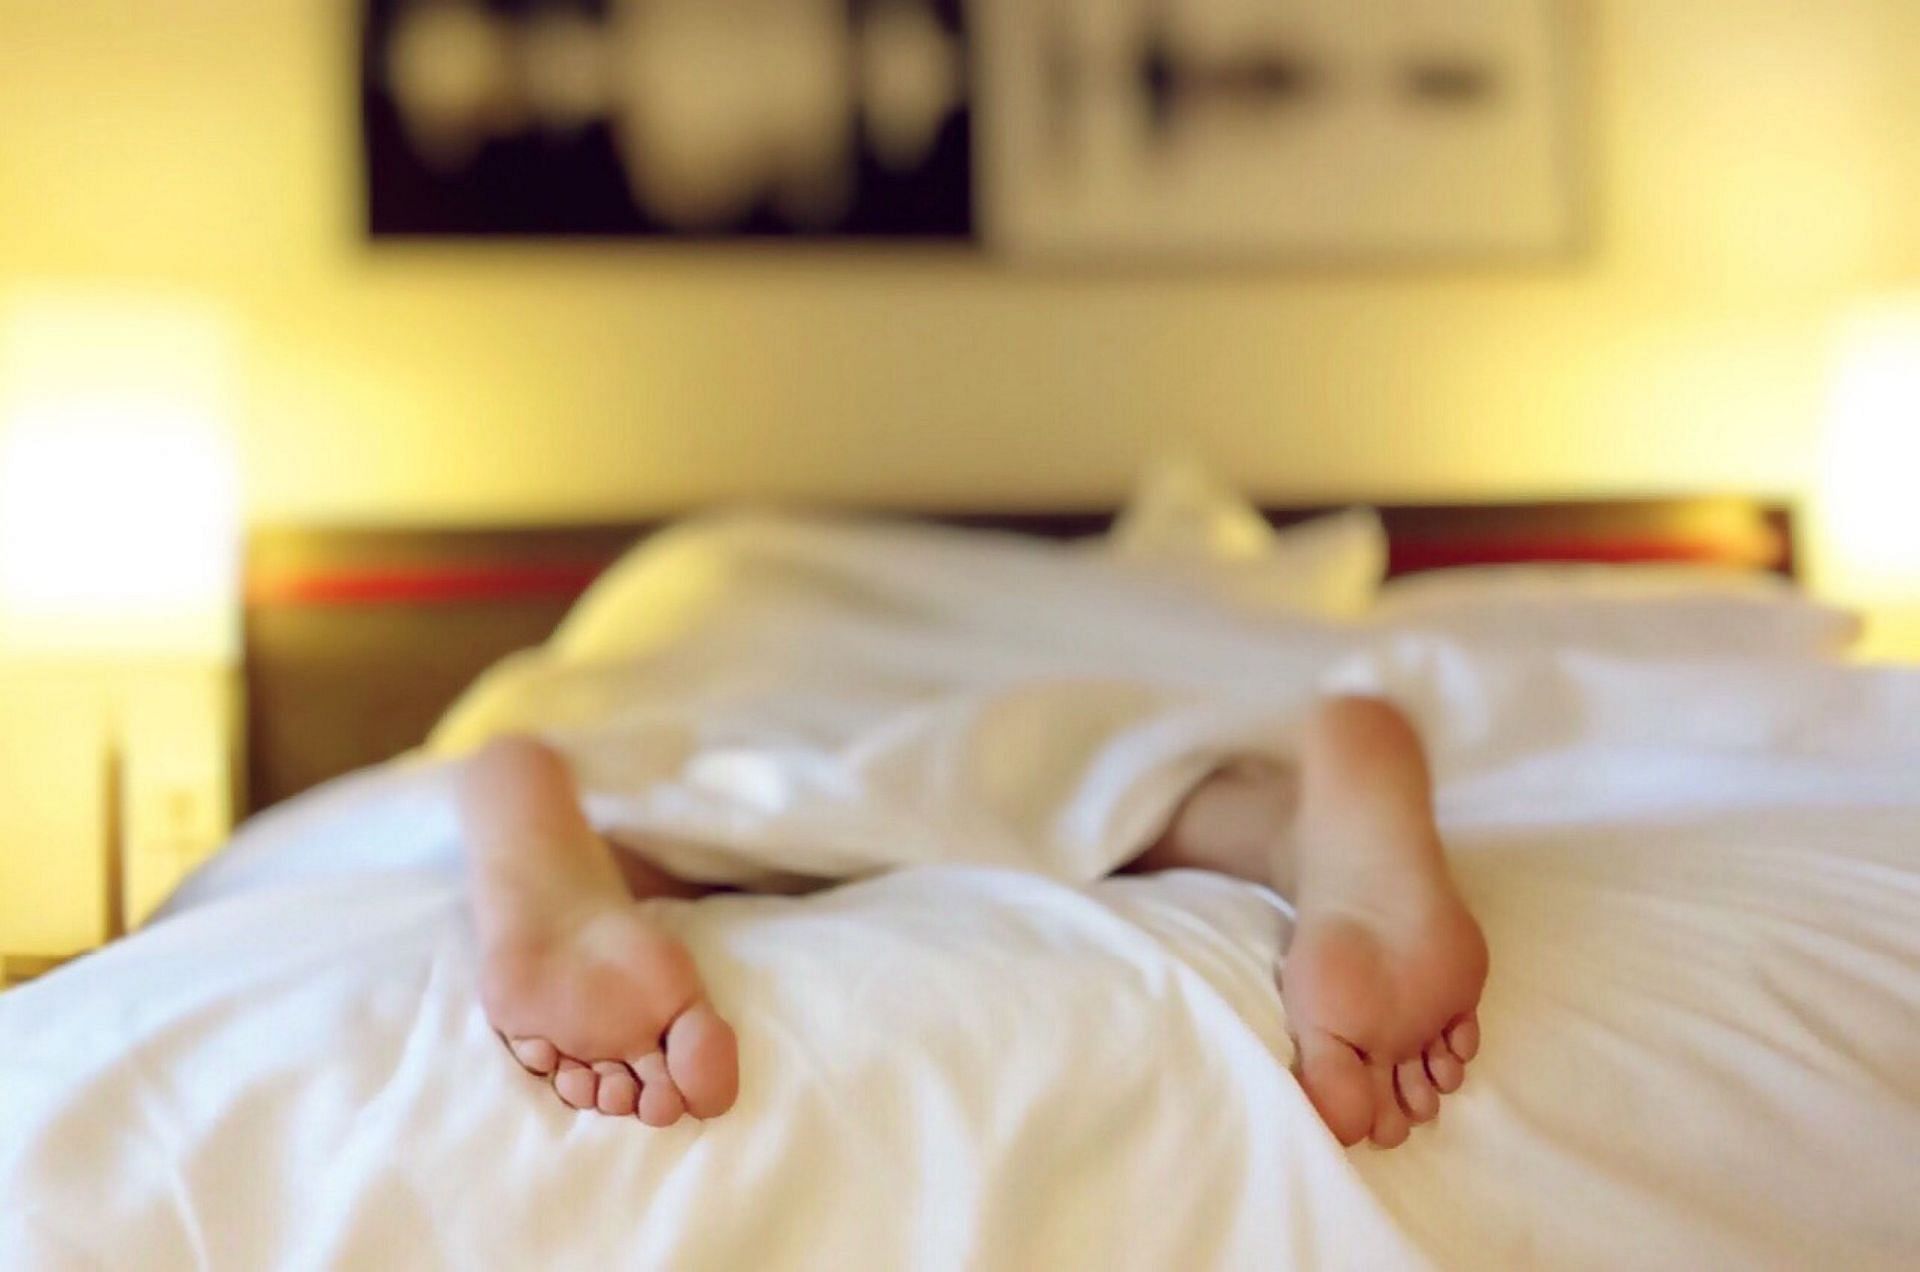 Sleeping for more than nine hours may not indicate a good sleep. (Image via Pexels/Pixabay)